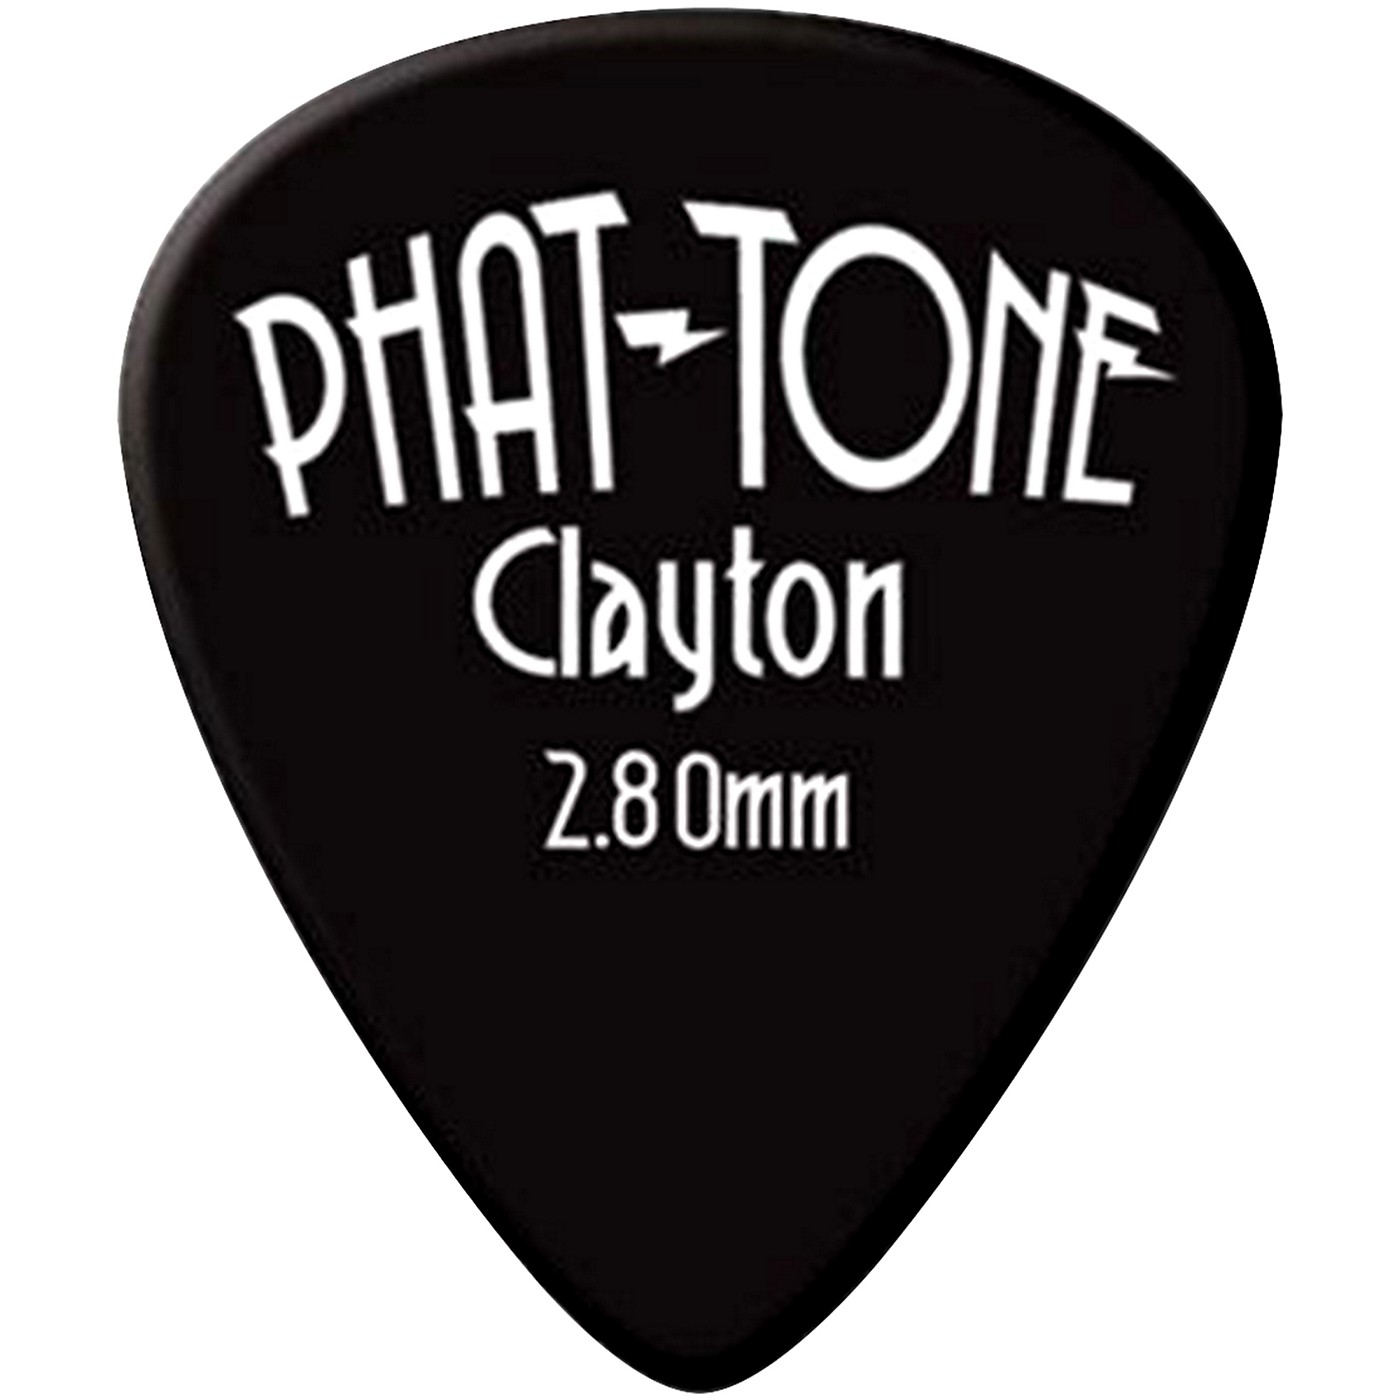 Clayton Phat-Tone Standard Rubber Picks 3-Picks thumbnail